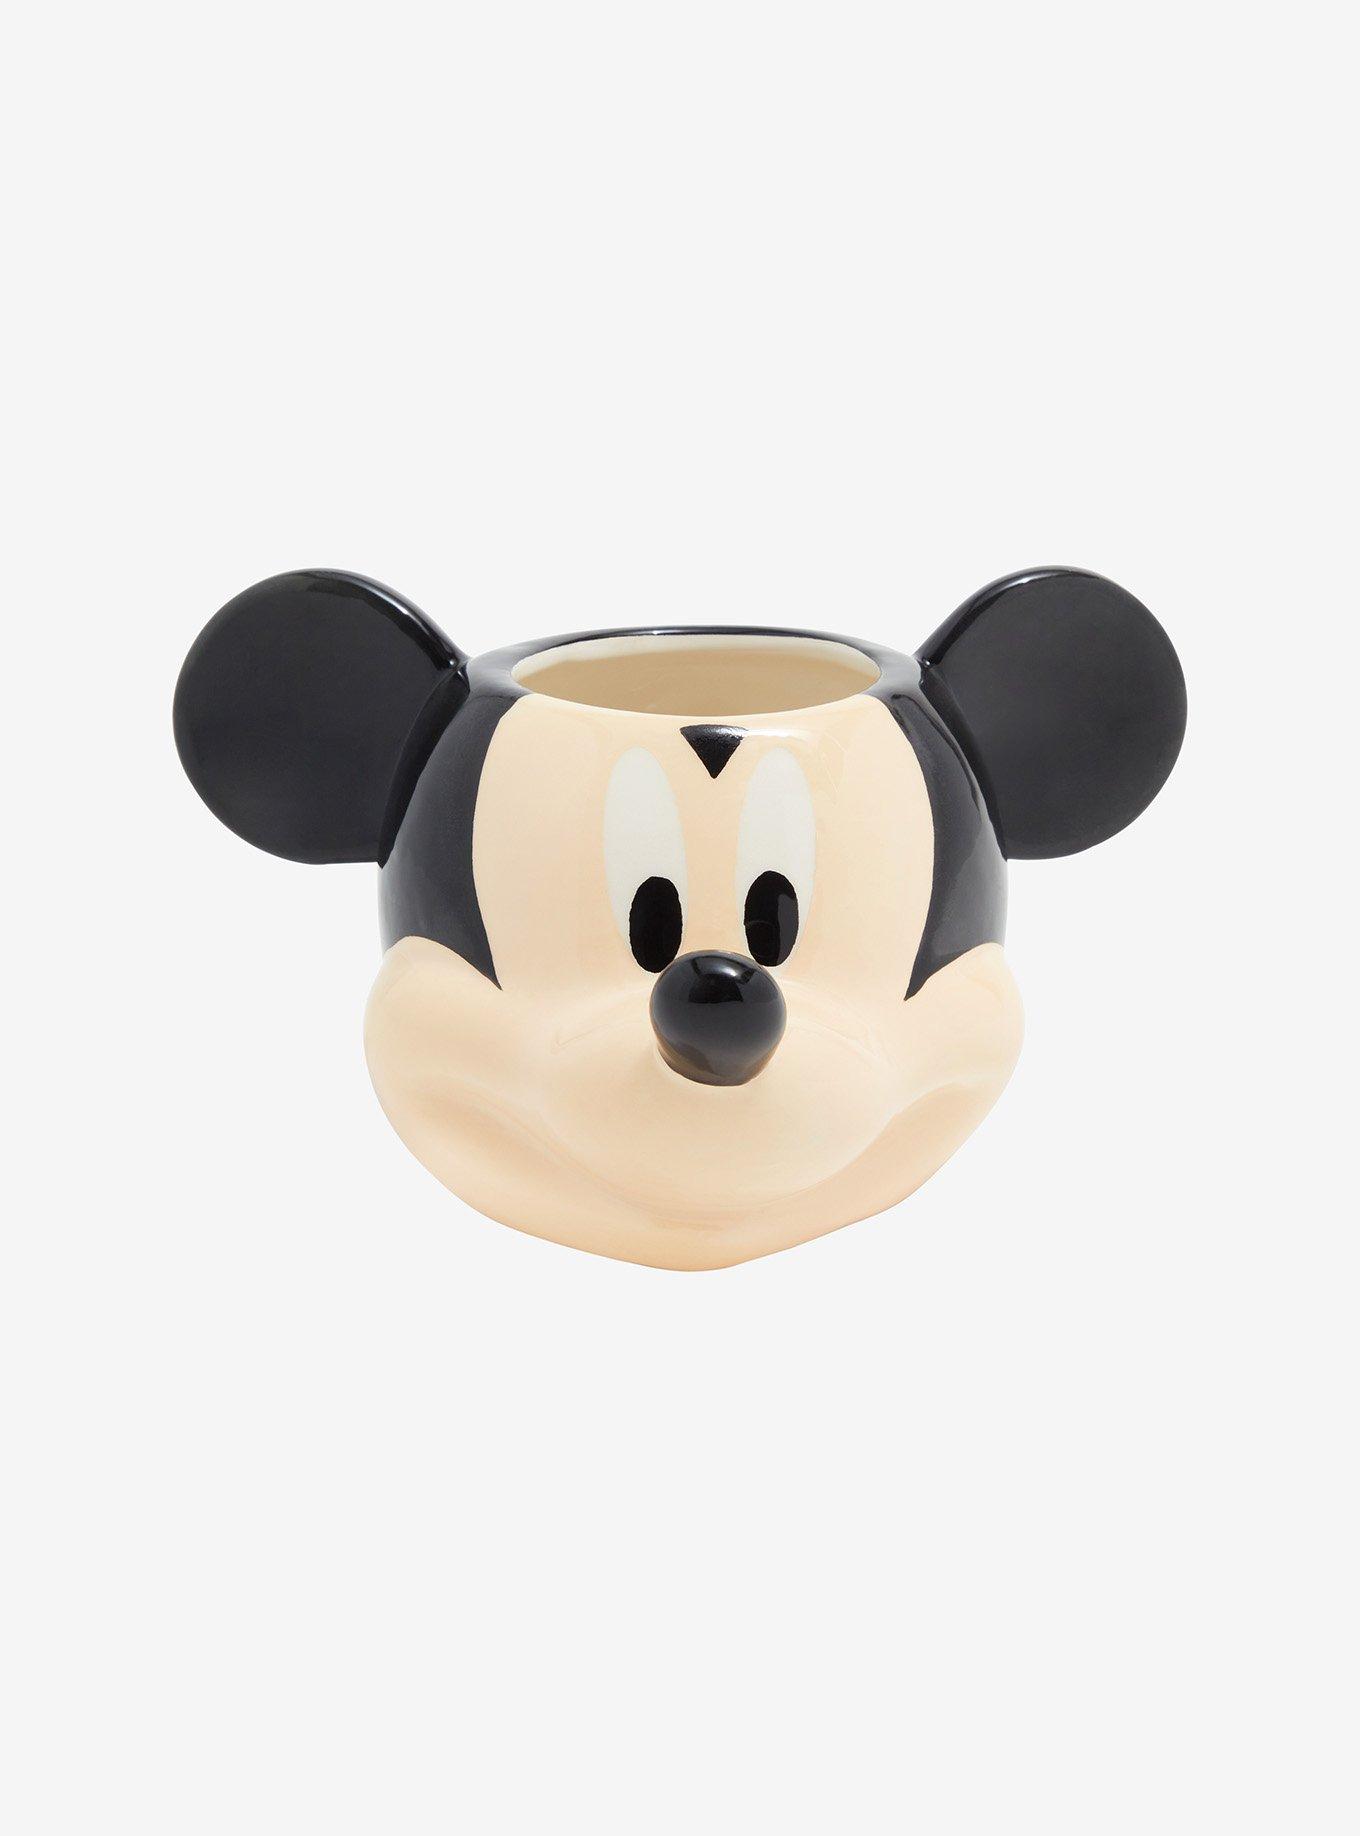 Minnie Mouse Figural Mug